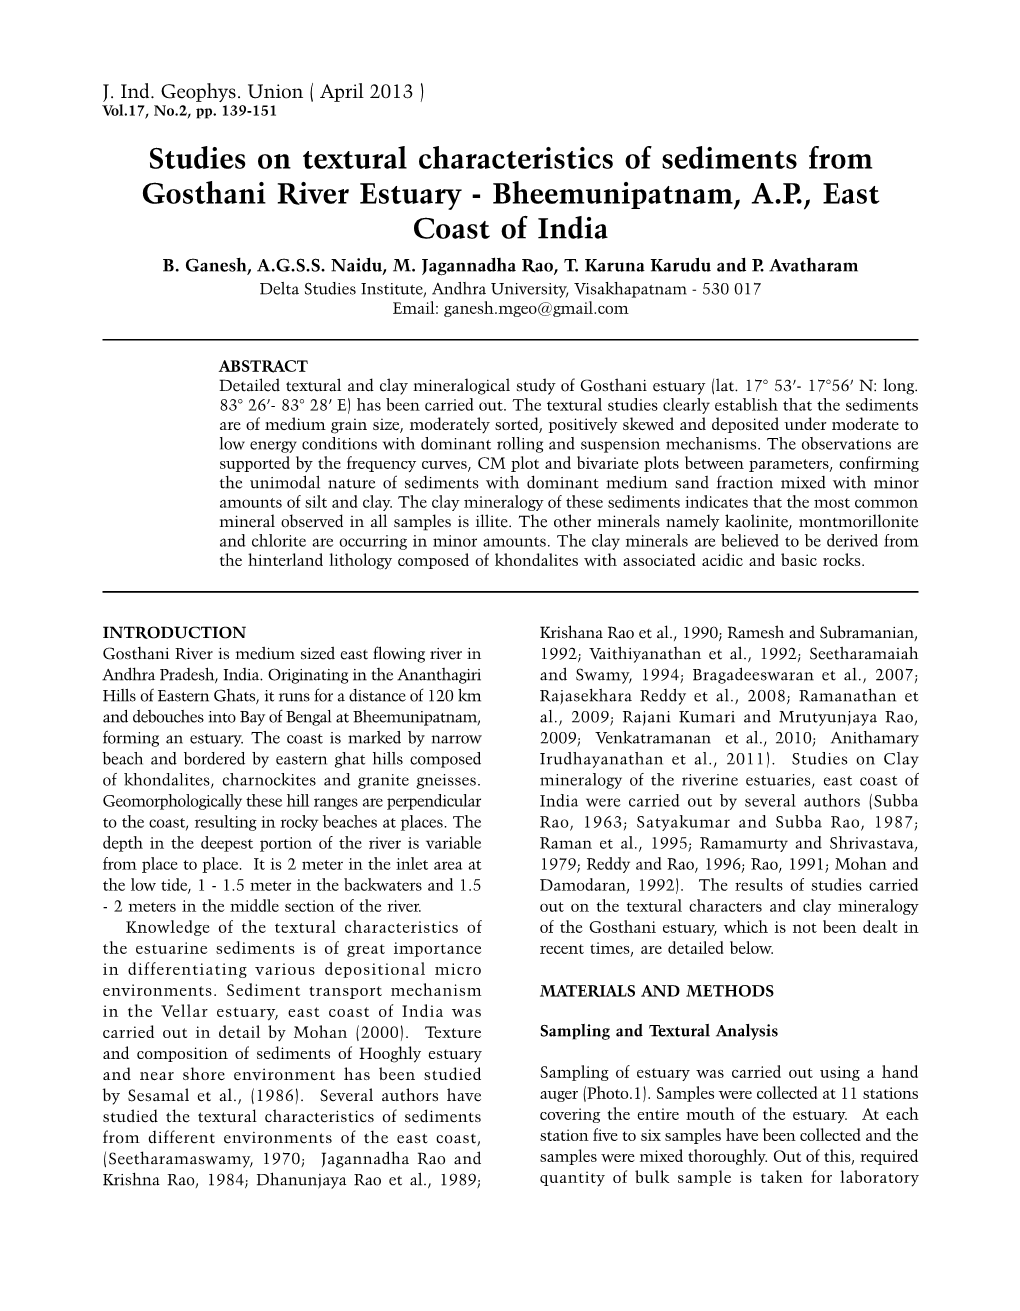 Studies on Textural Characteristics of Sediments from Gosthani River Estuary - Bheemunipatnam, A.P., East Coast of India B